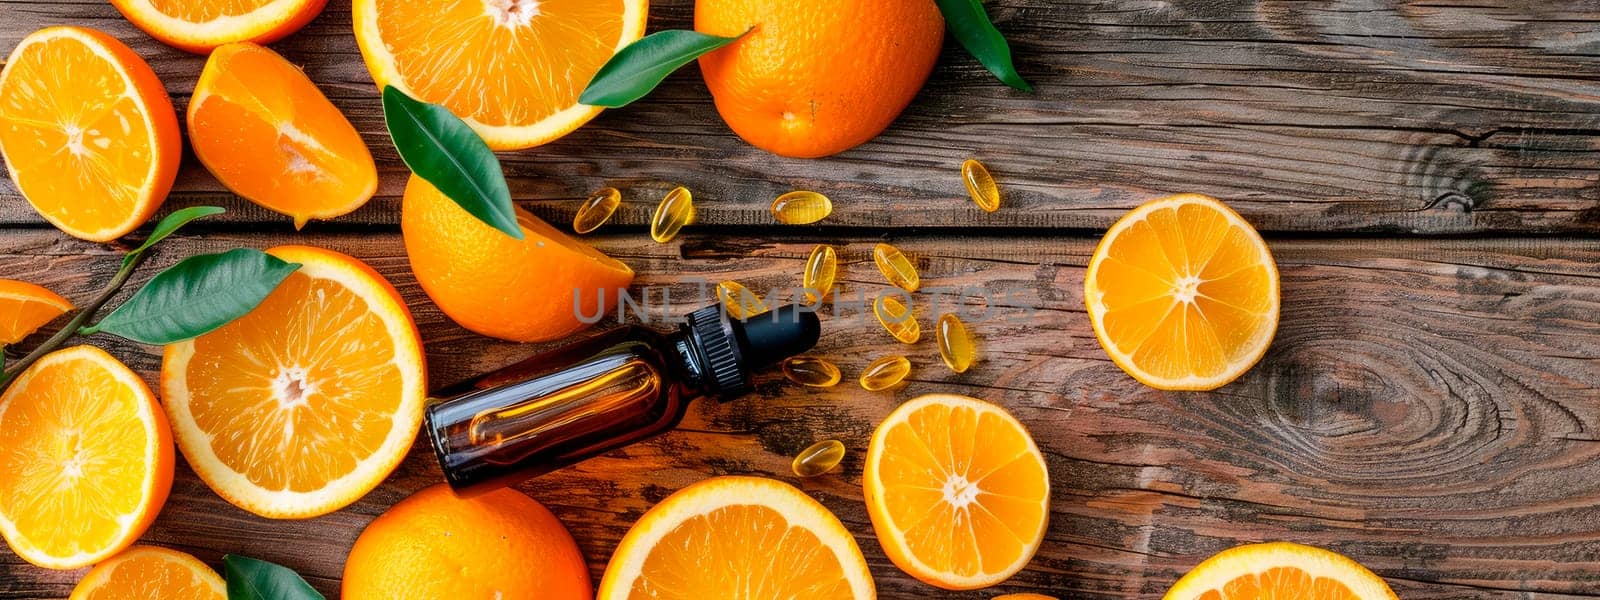 Citrus essential oil in a bottle. Selective focus. by yanadjana